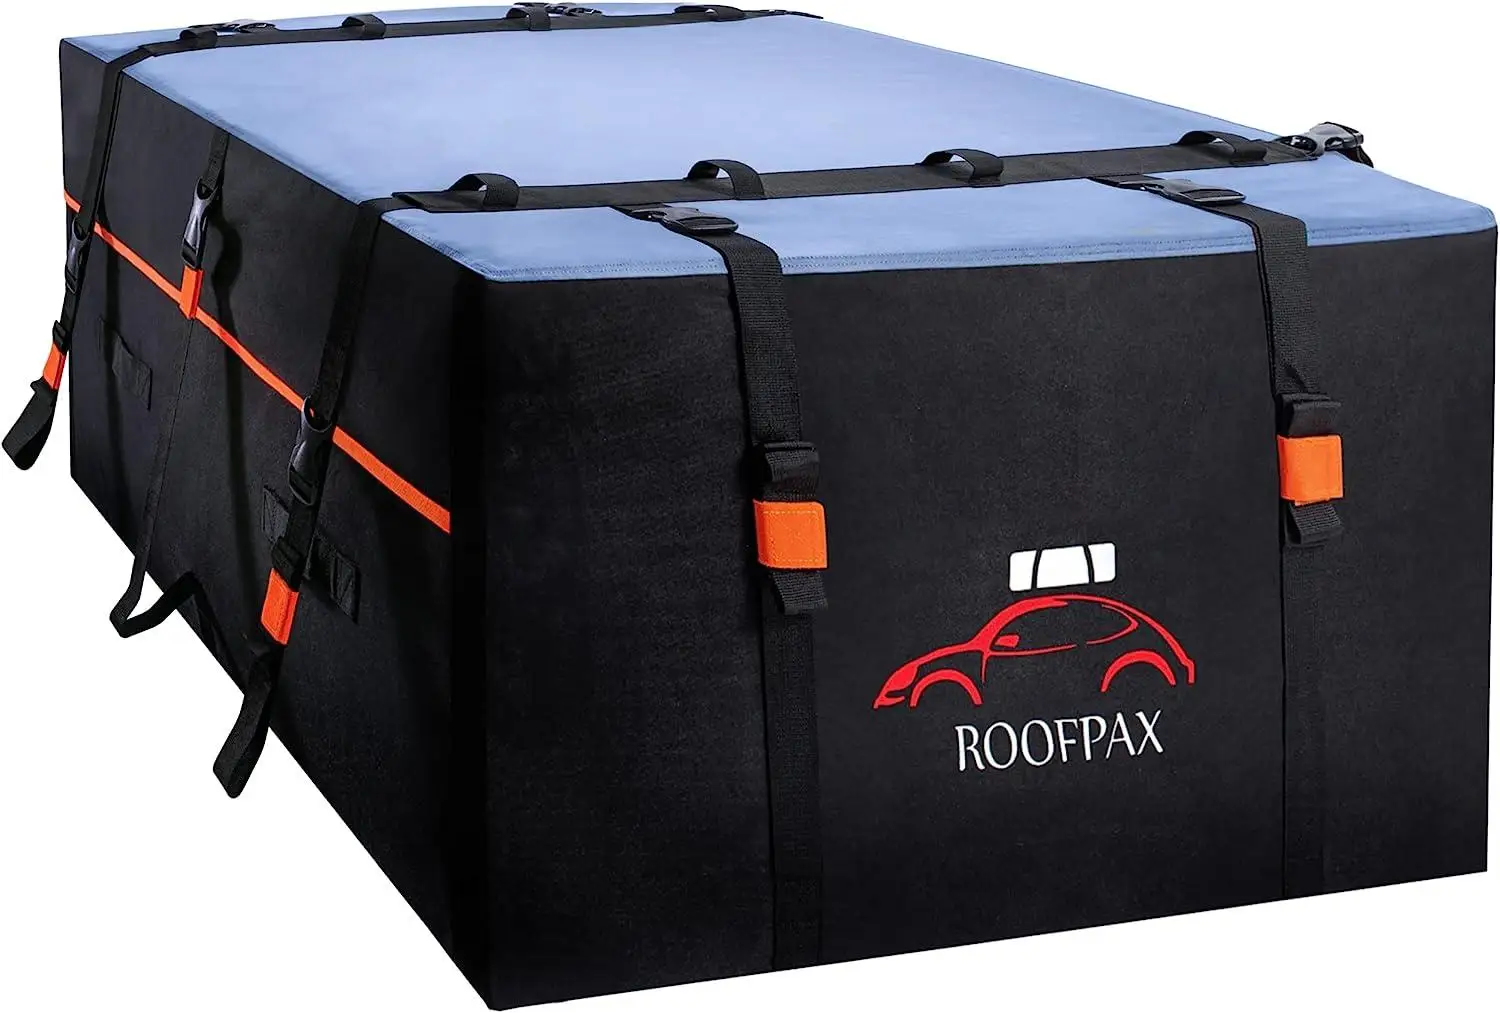 ROOFPAX Cargo Carrier Bag